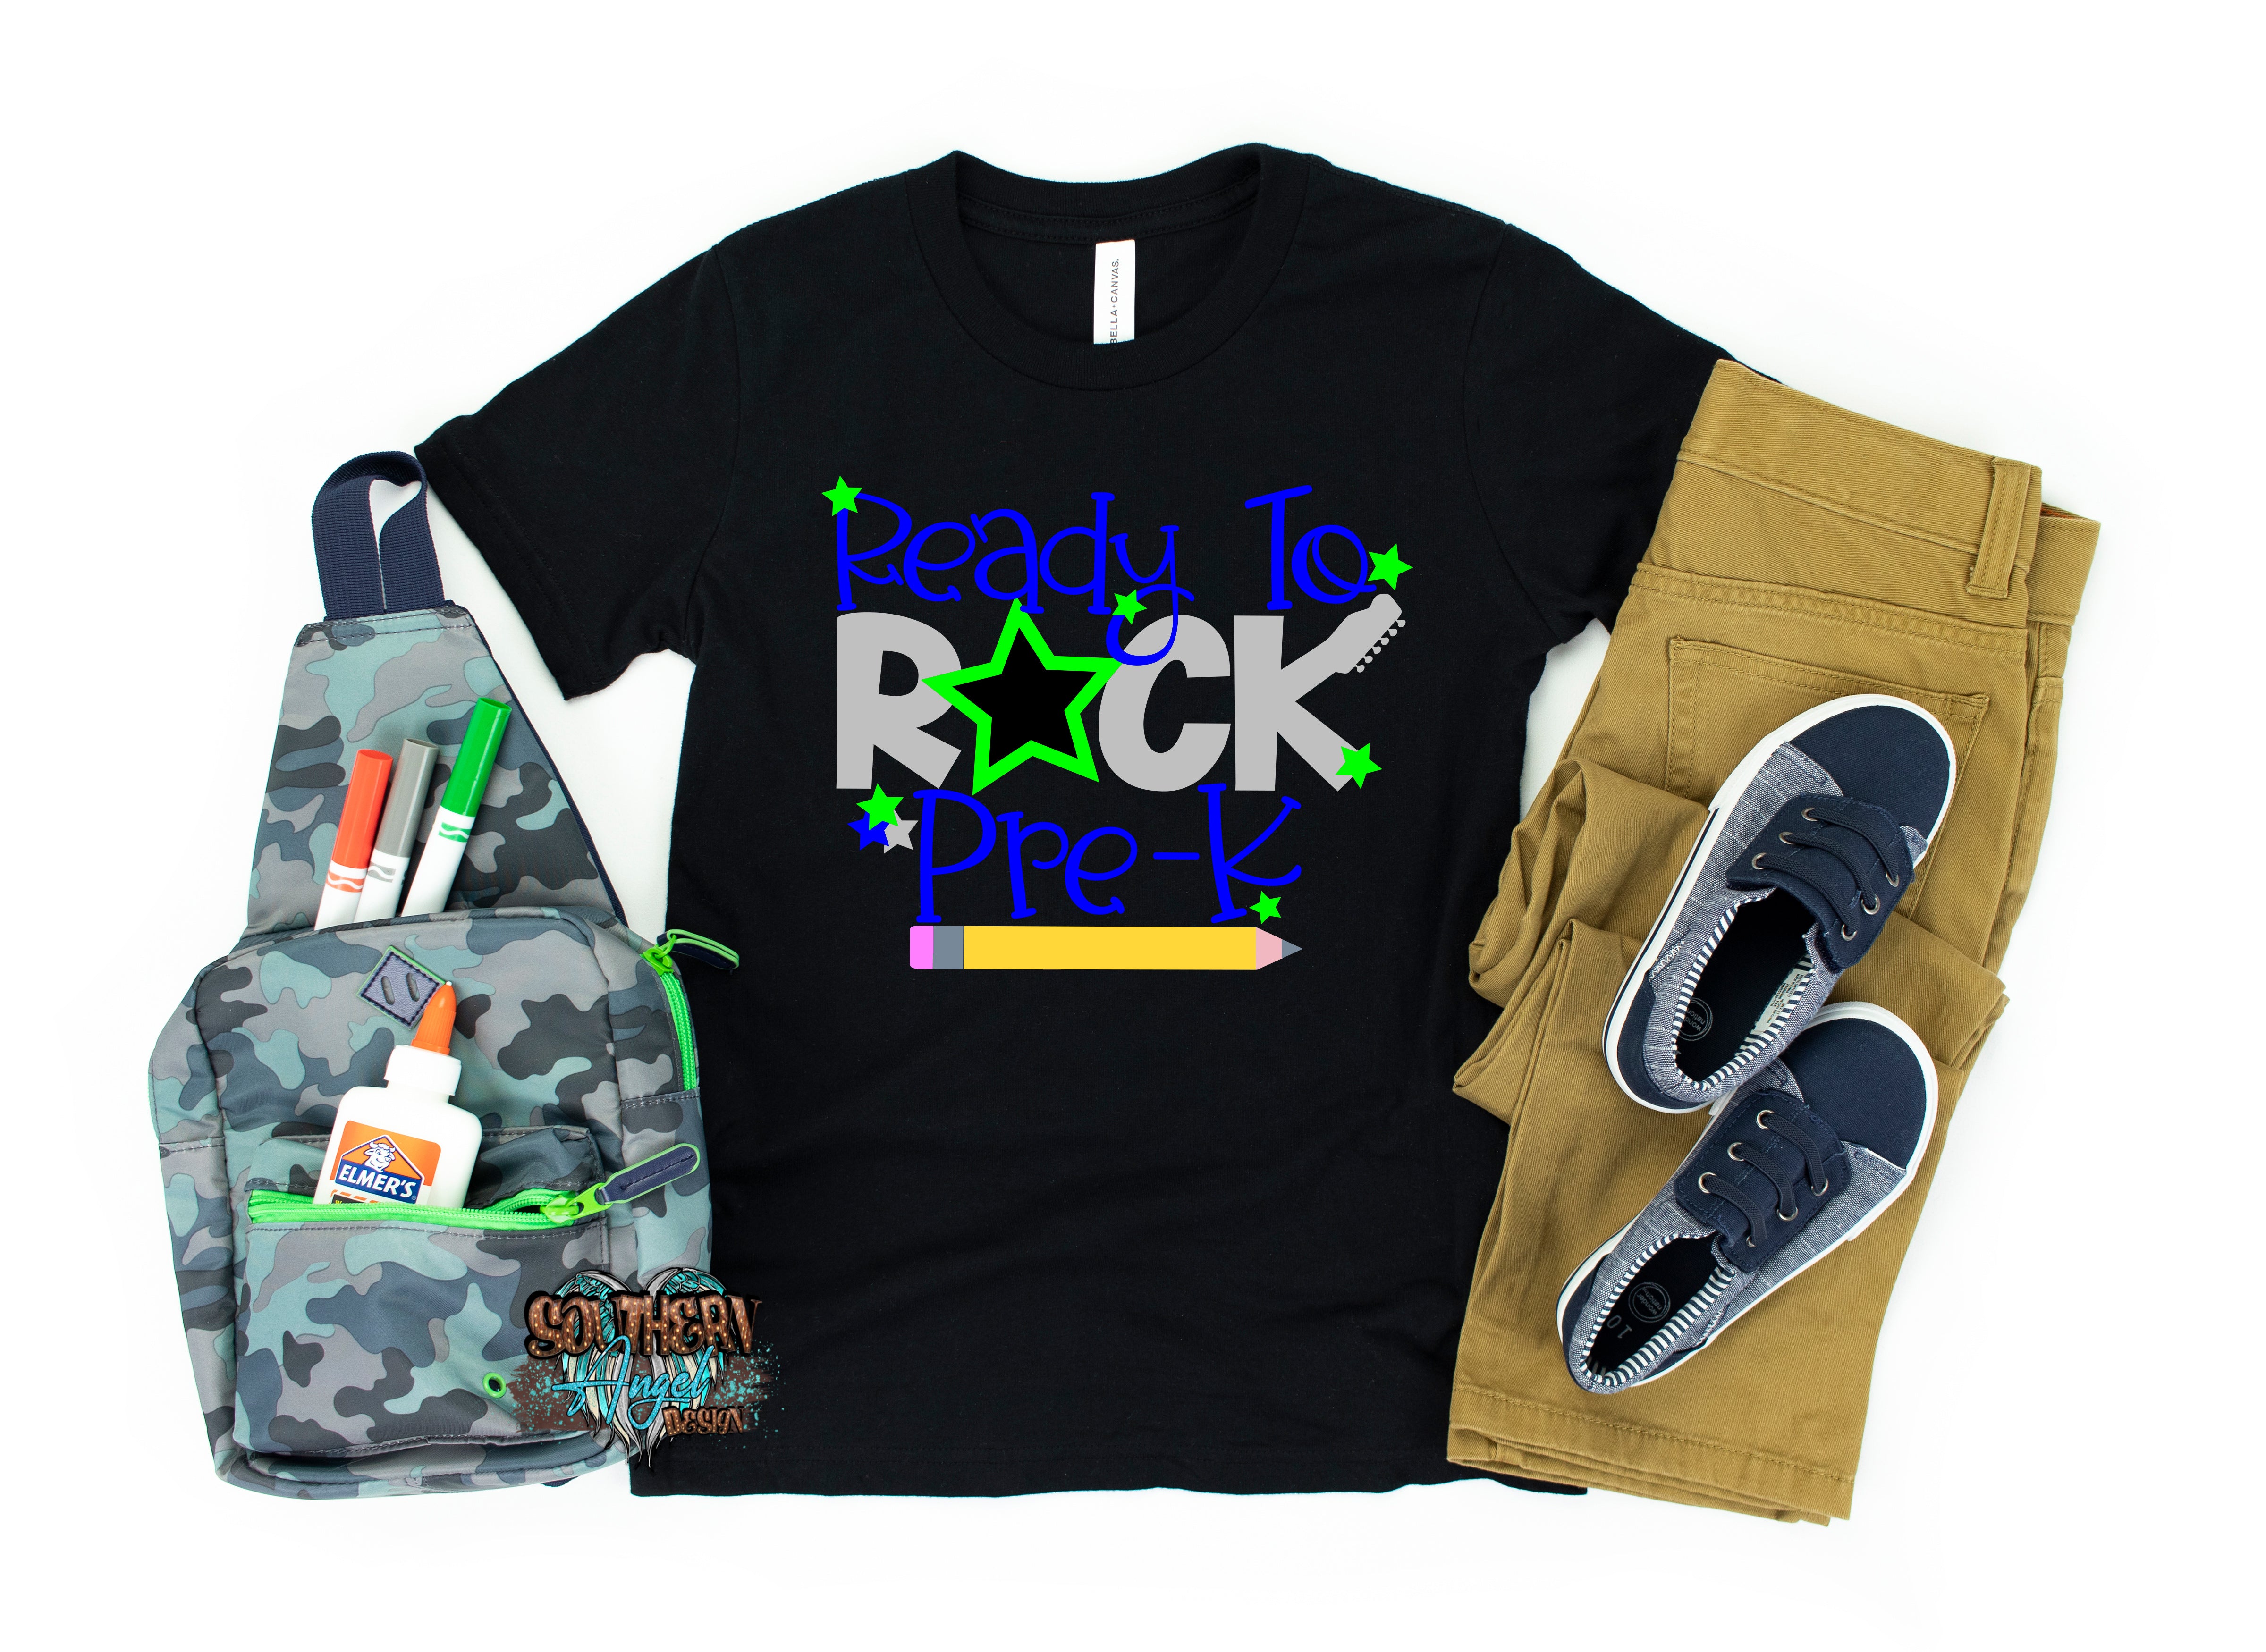 Black Ready To Rock Pre-K image_5d451771-6296-454c-822e-4b26fa6cc0ec.jpg ready-to-rock Back To School